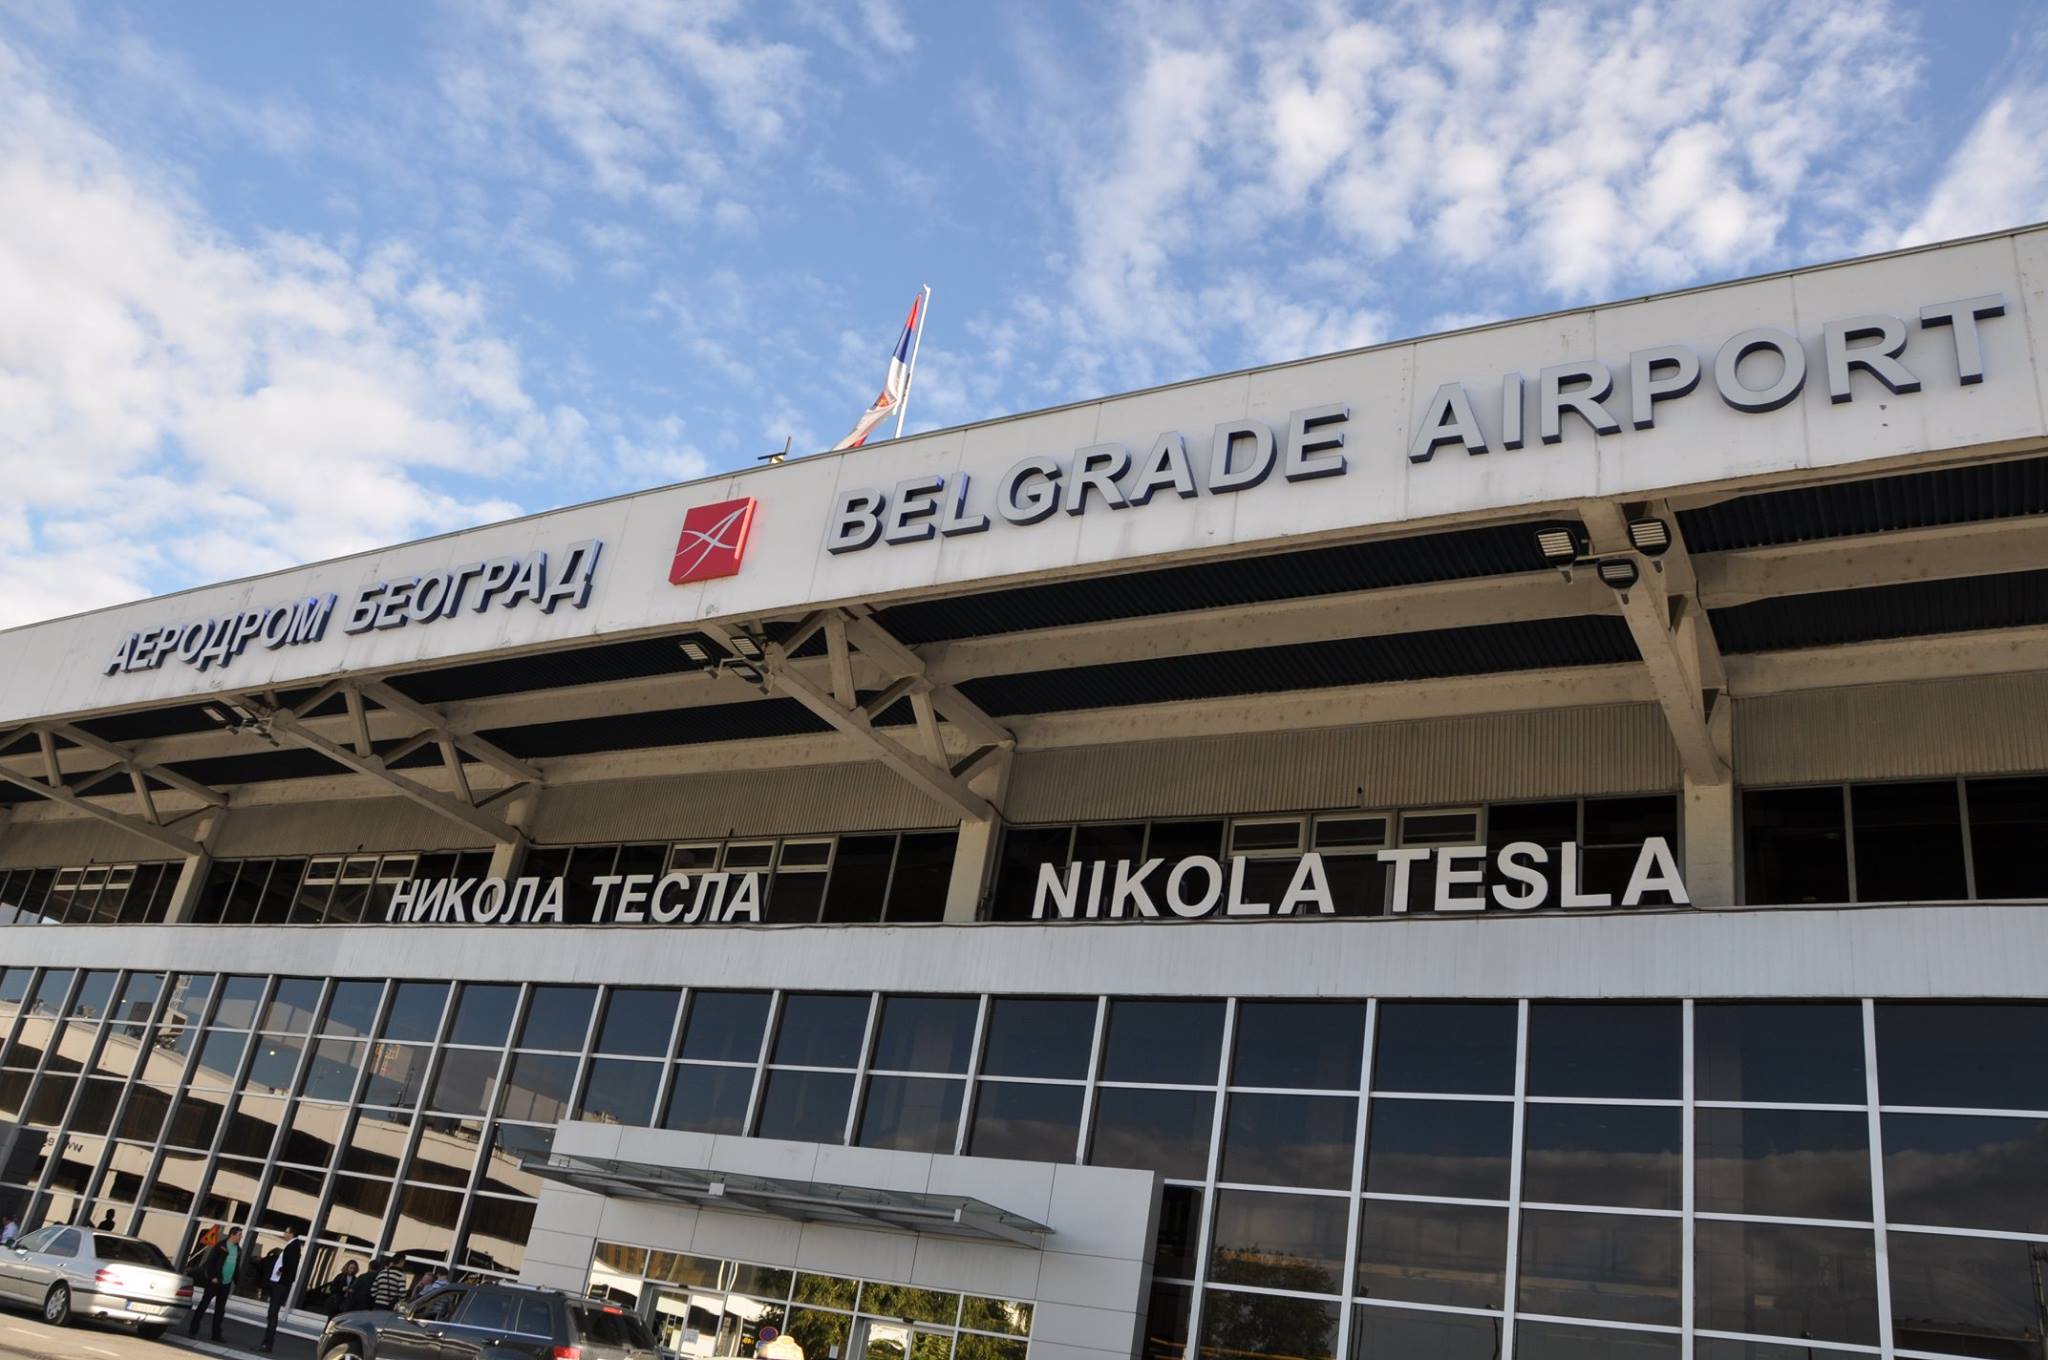 Belgrade Nikola Tesla Airport set for €730 million development